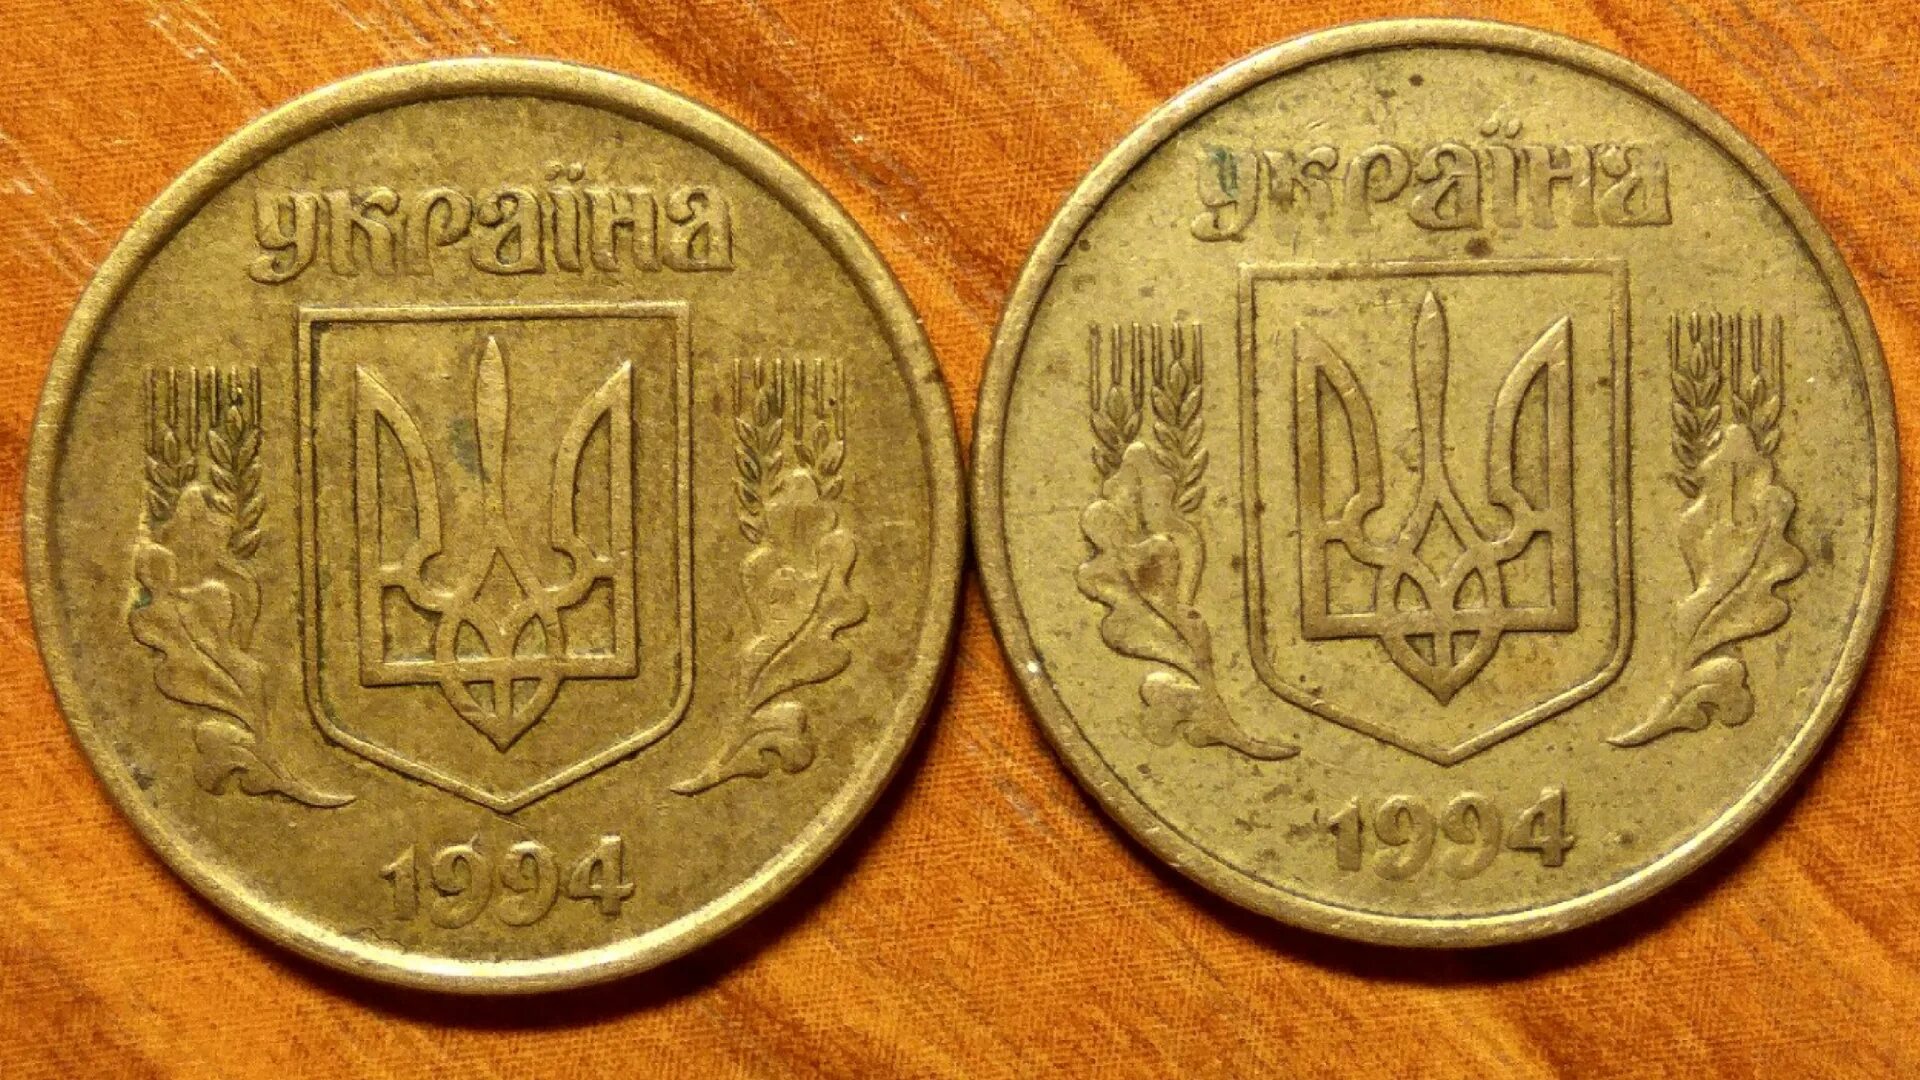 25 Копеек 1994. Монета 10 1994. 25 Копеек Украина. 1 Копейка 1994. 25 украинских копеек